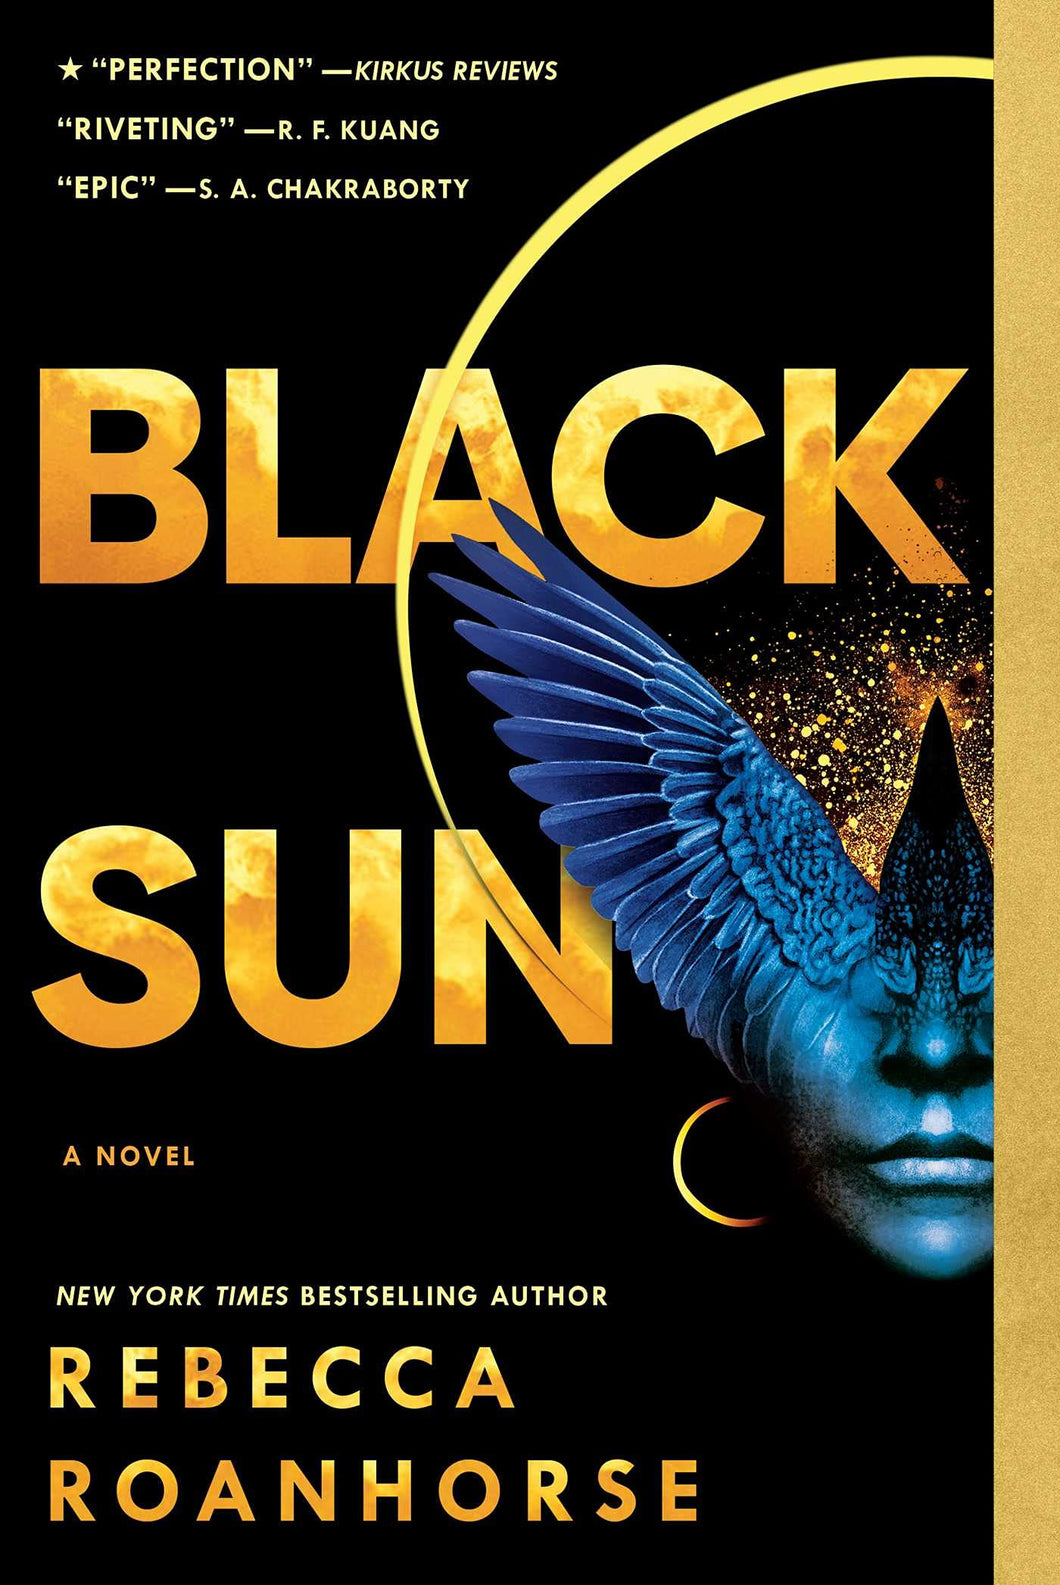 Black Sun (Between Earth and Sky) by Rebecca Roanhorse